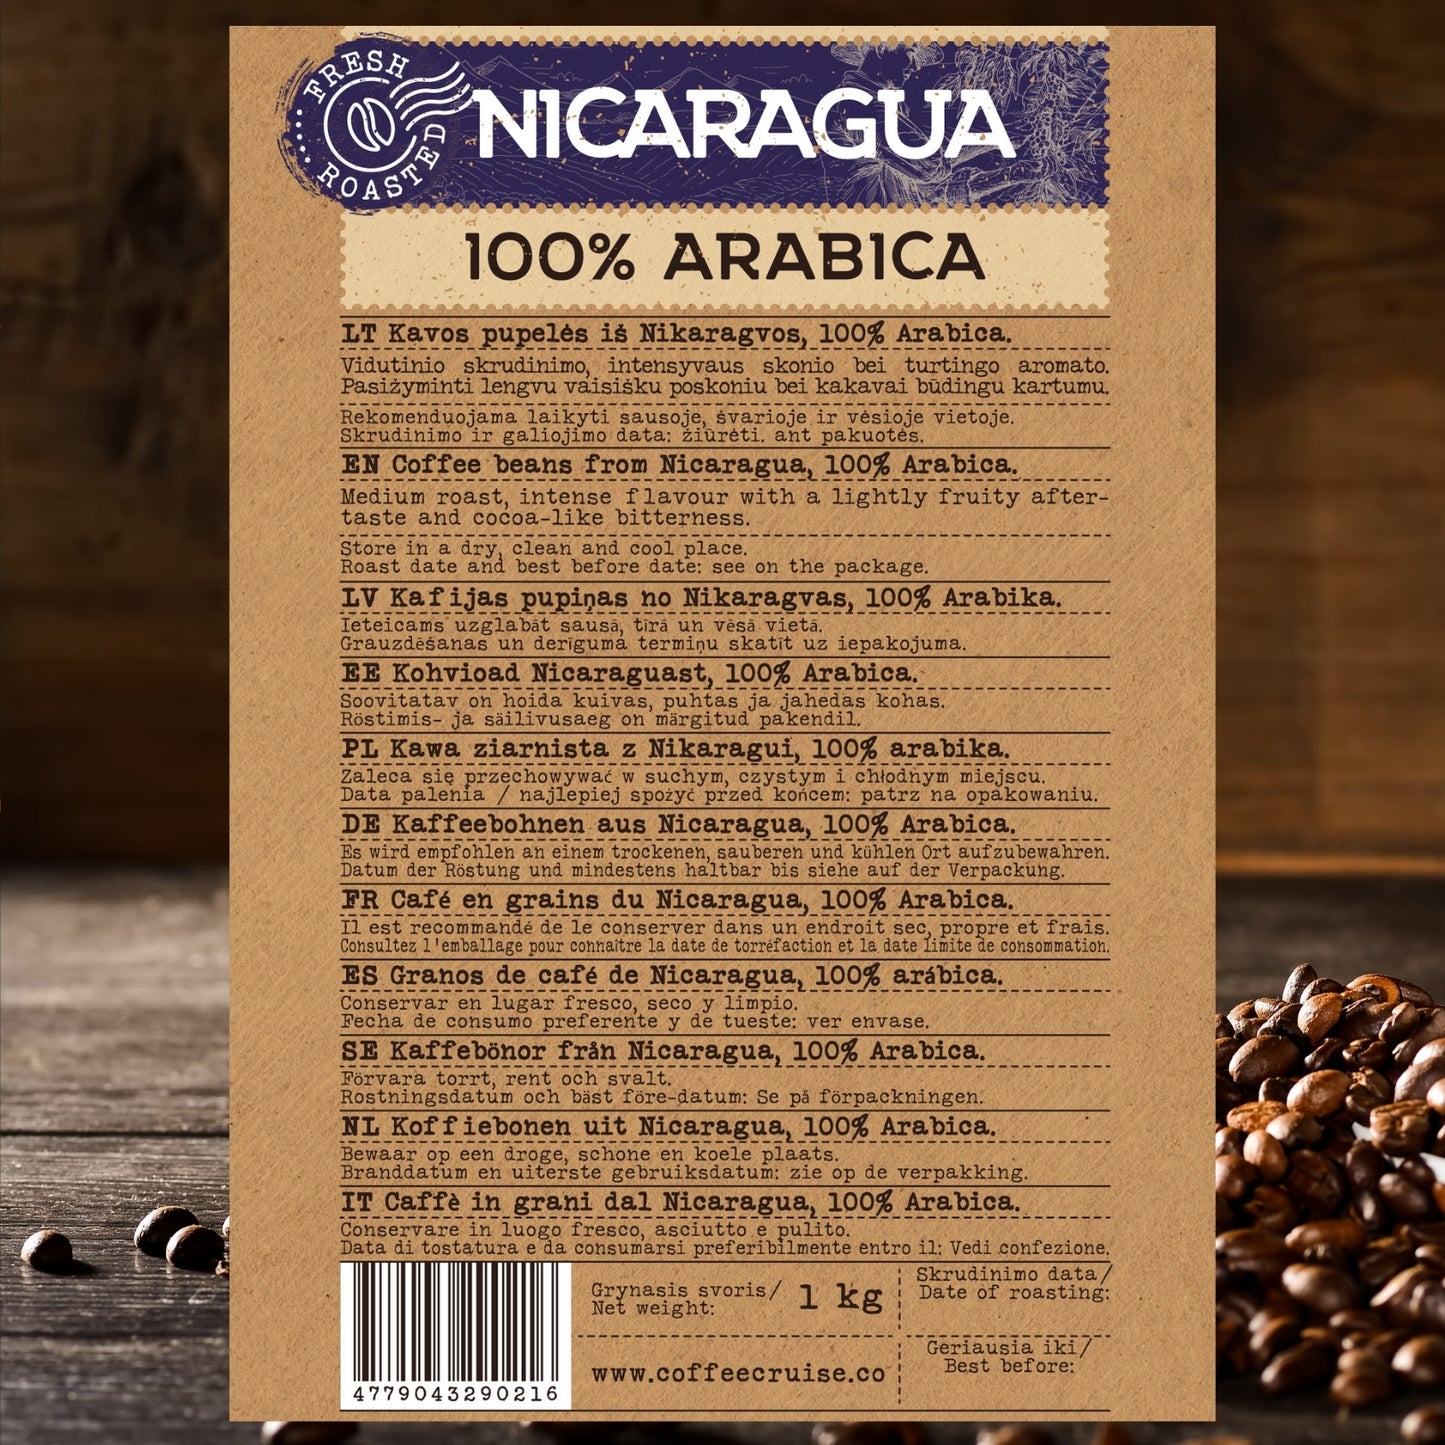 Nicaragua Coffee ingredient explanation